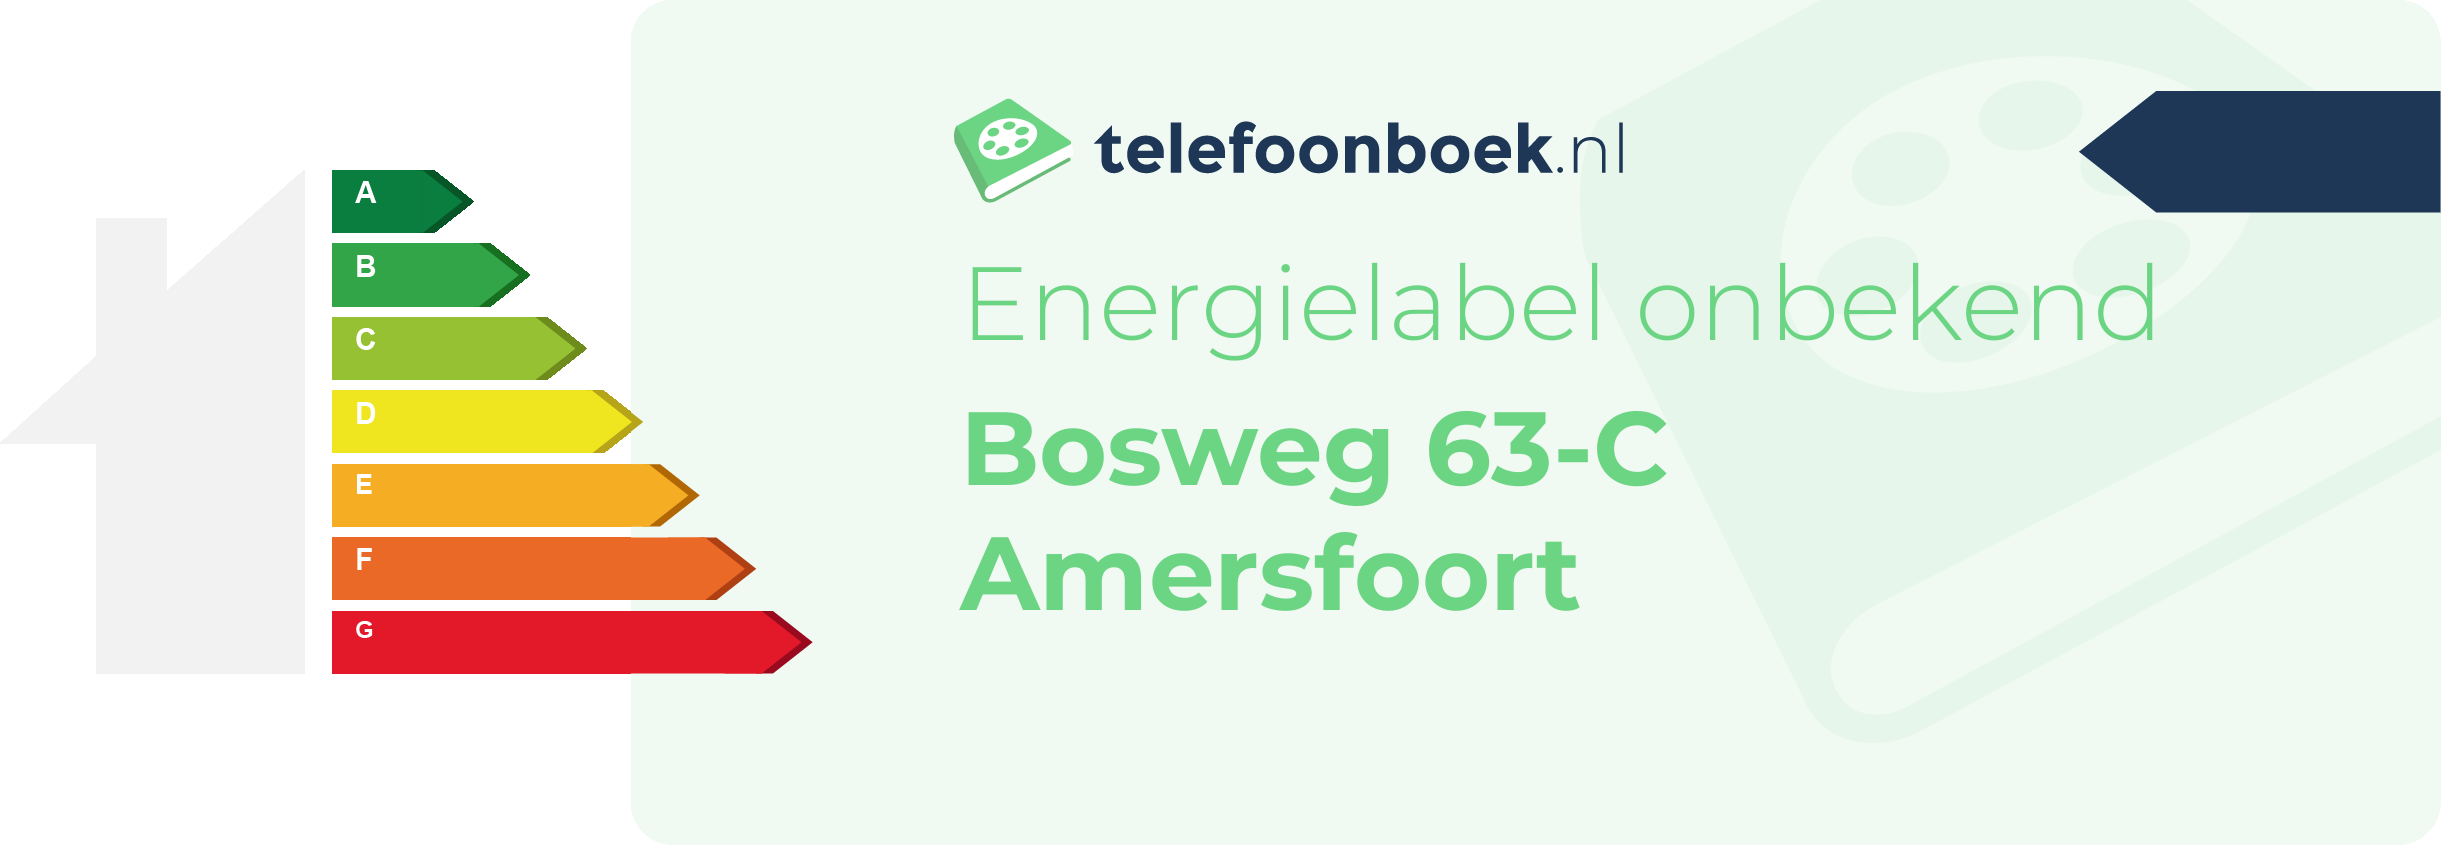 Energielabel Bosweg 63-C Amersfoort